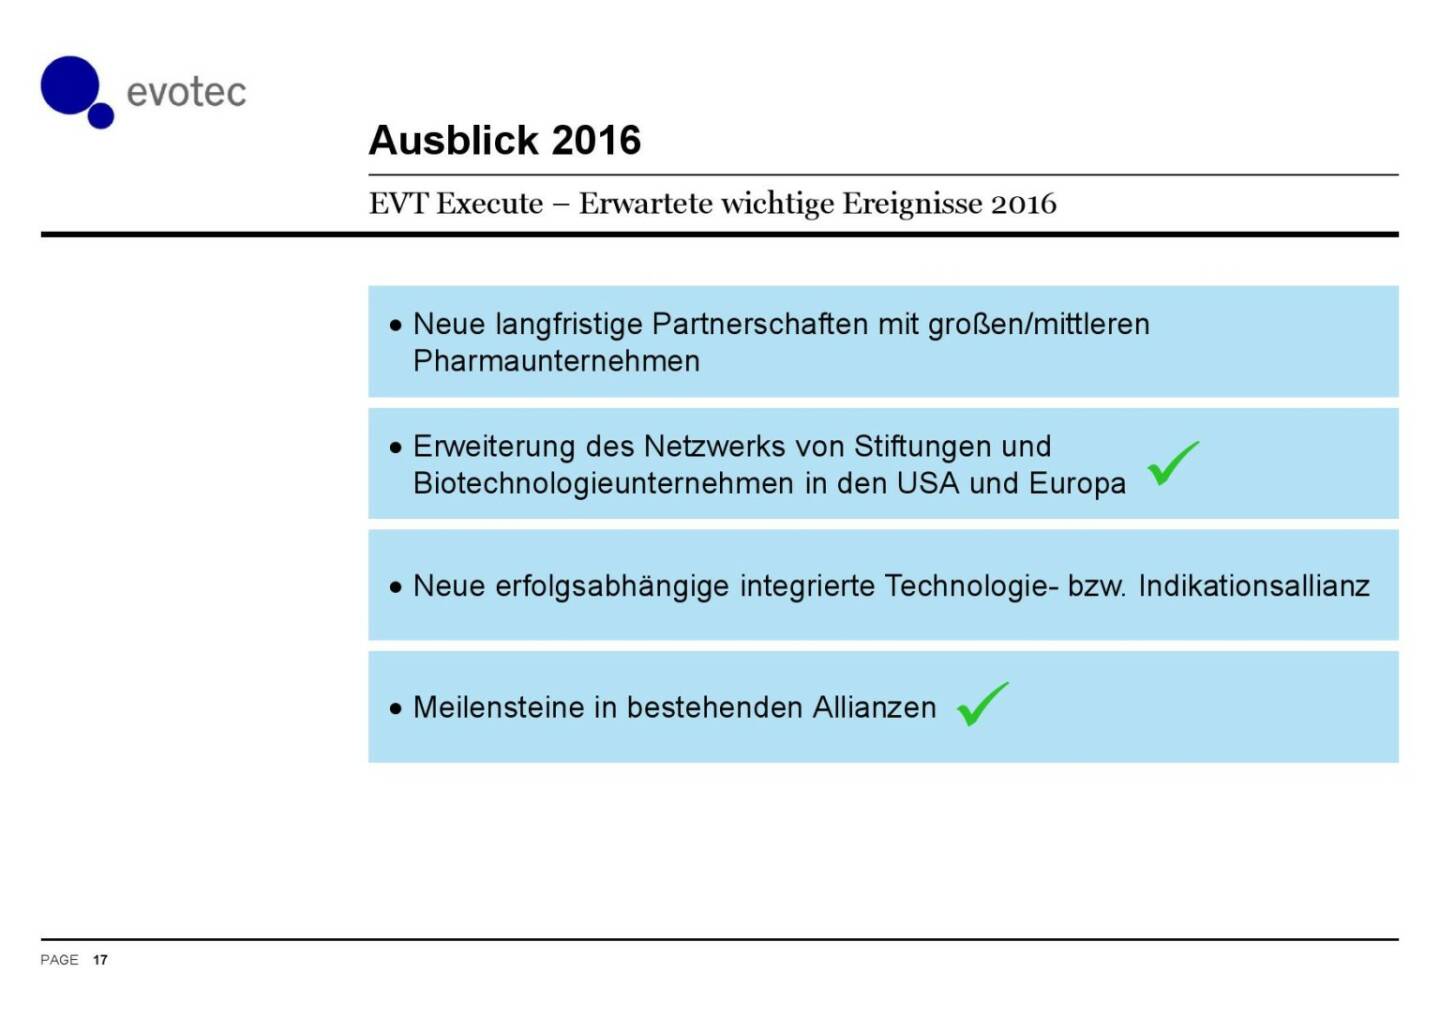 Evotec - Ausblick 2016